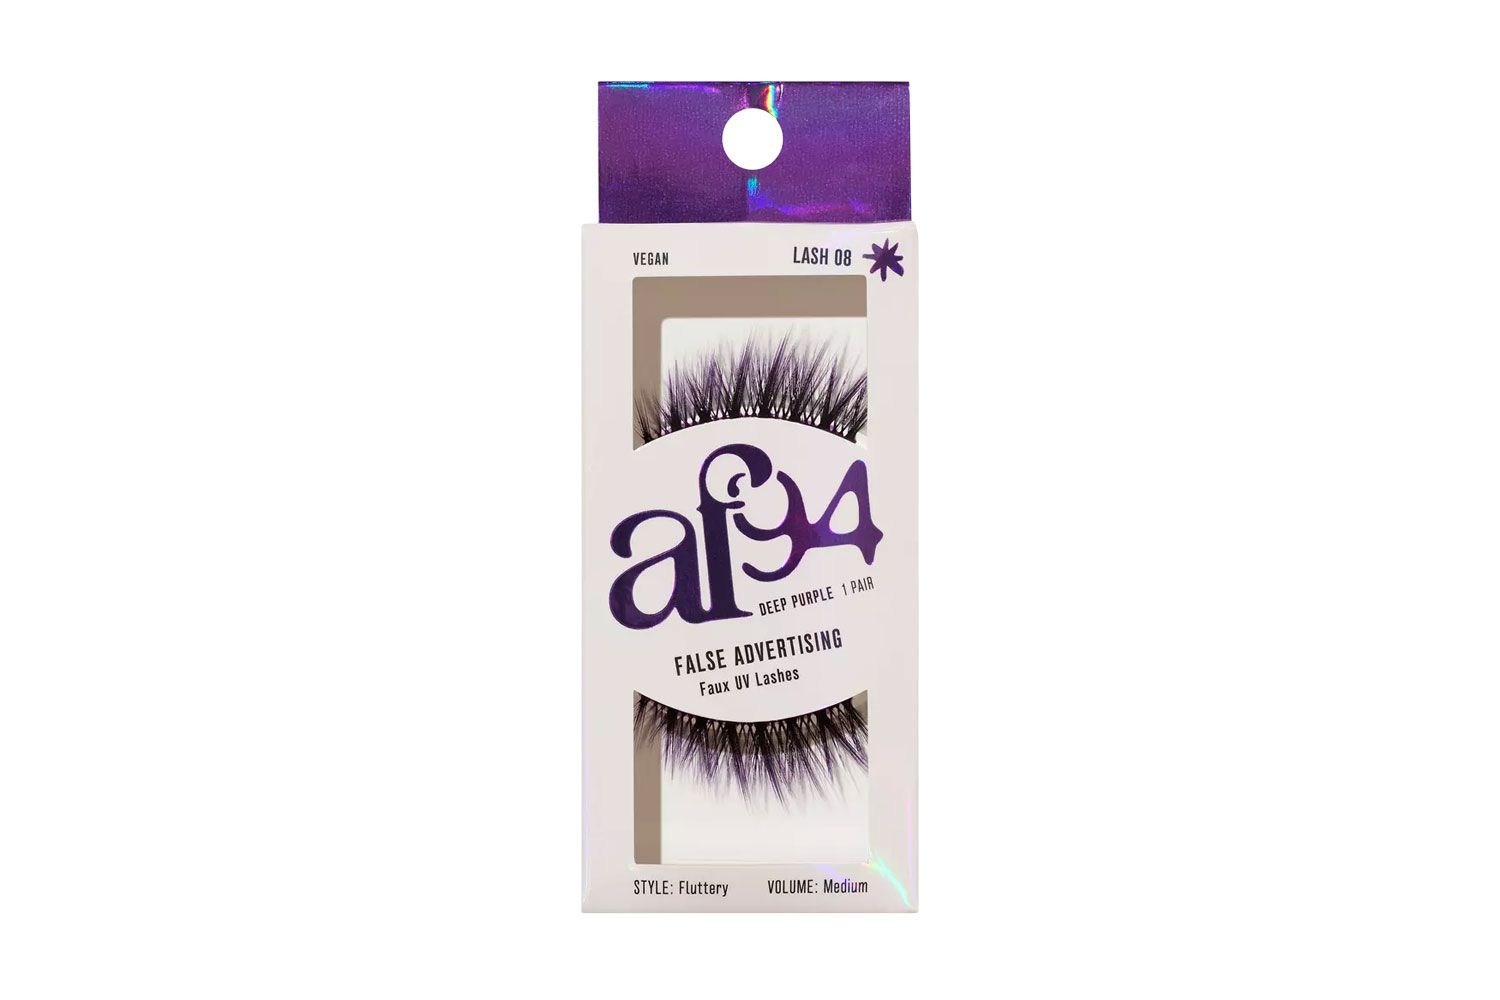 AF94 Deep Purple False Advertising Faux UV Lashes 